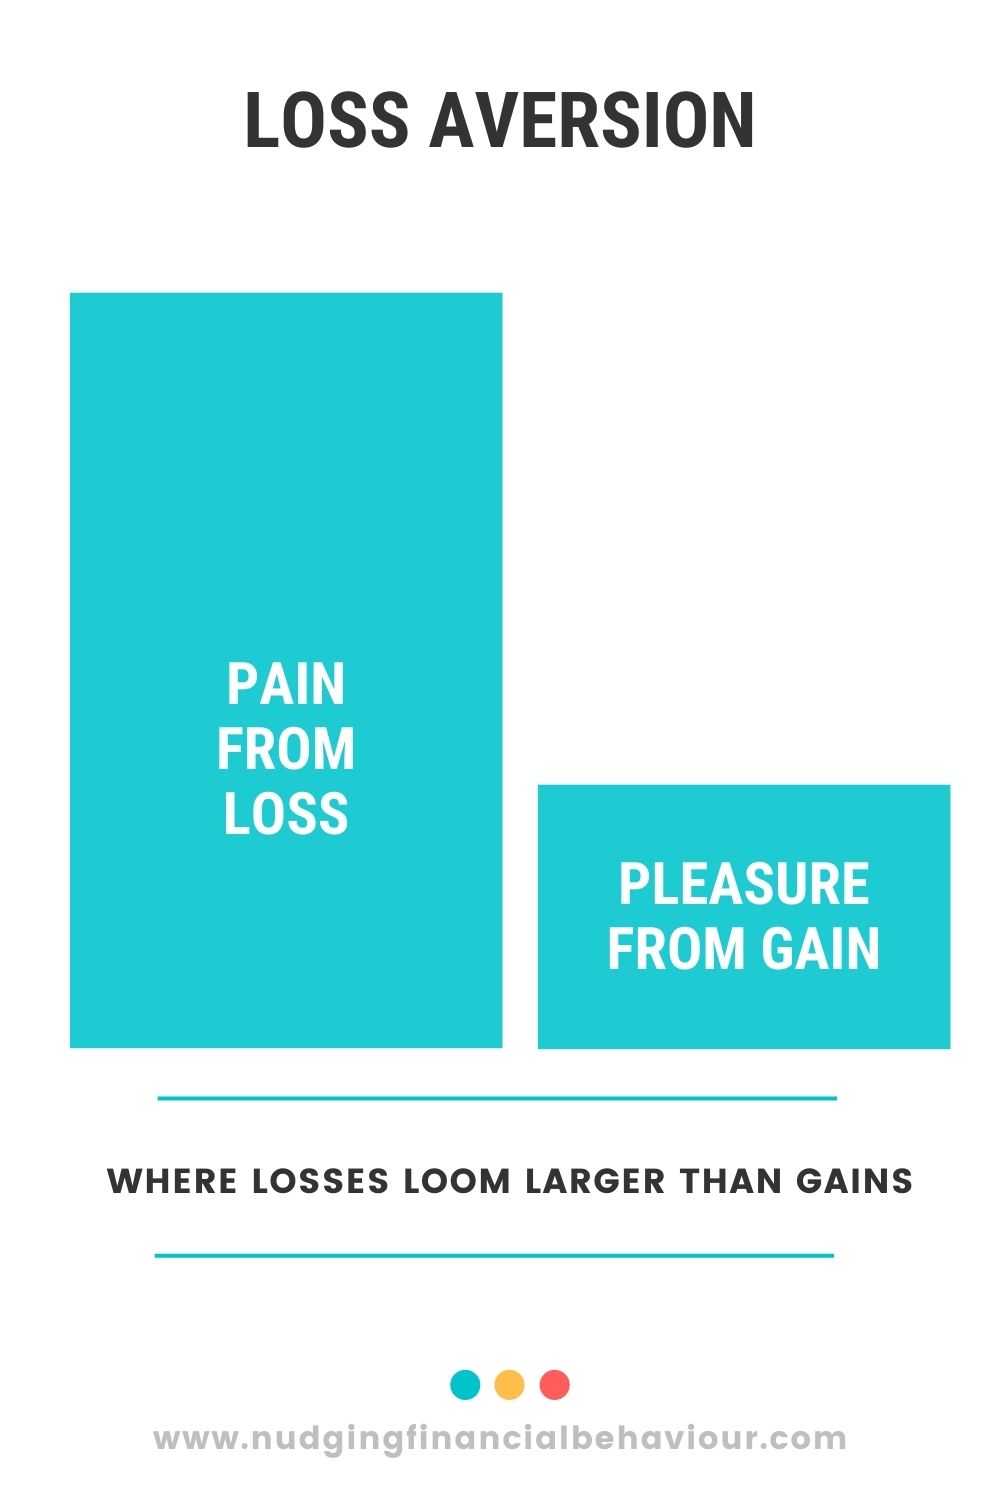 Loss aversion vs gain